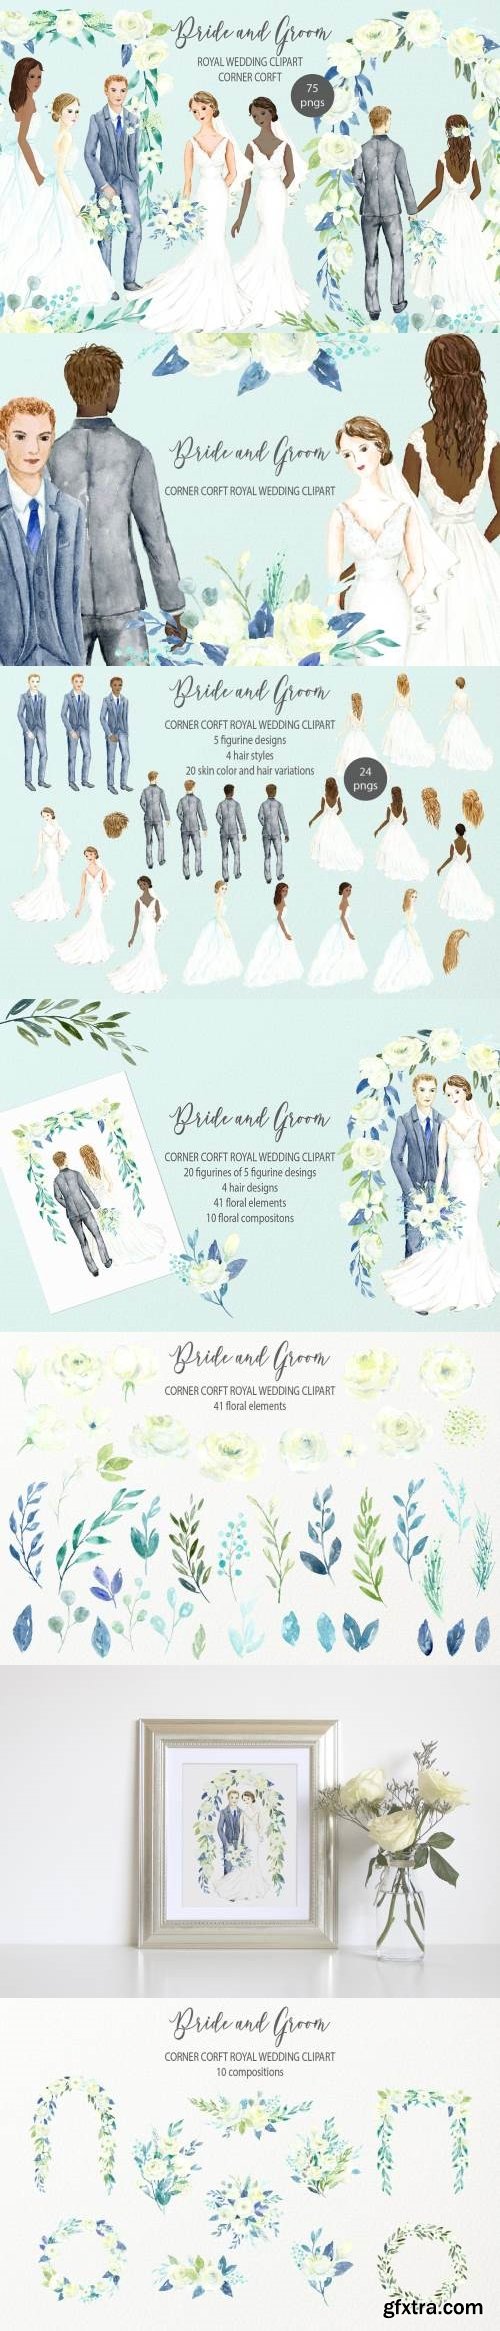 Bride and Groom Royal Wedding Clipart